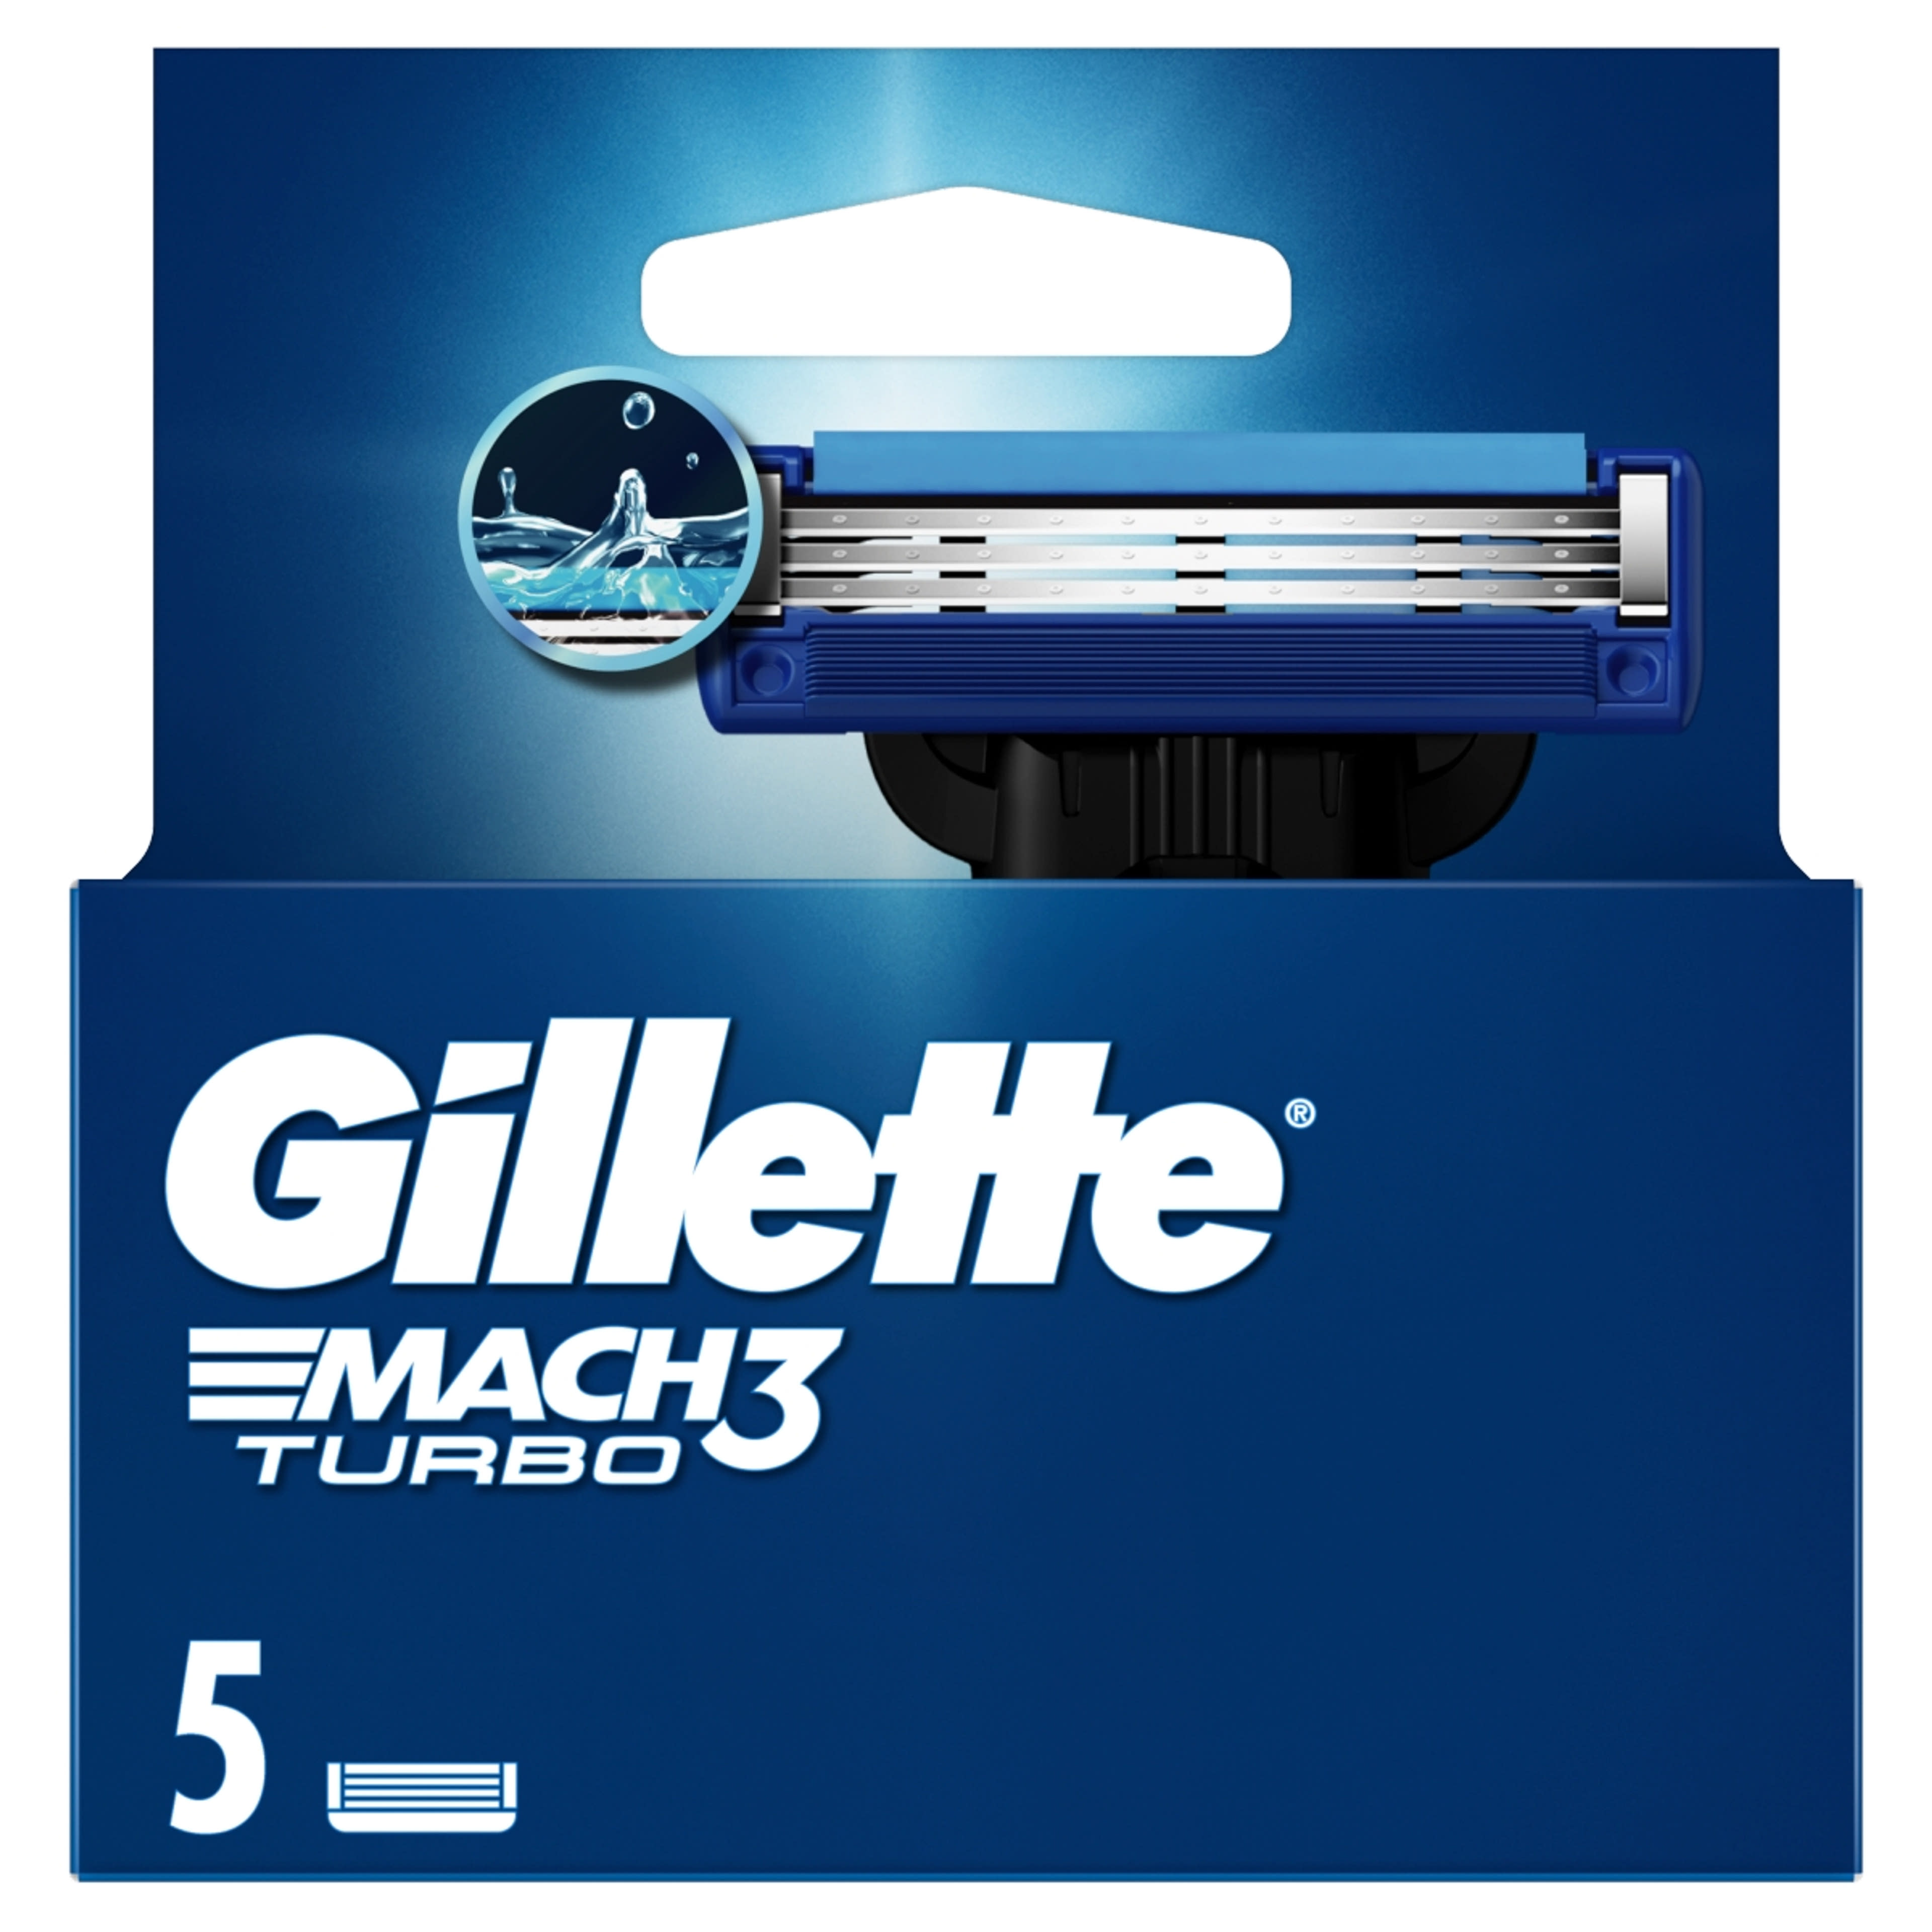 Gillette Mach 3 turbo borotvabetét  - 5 db